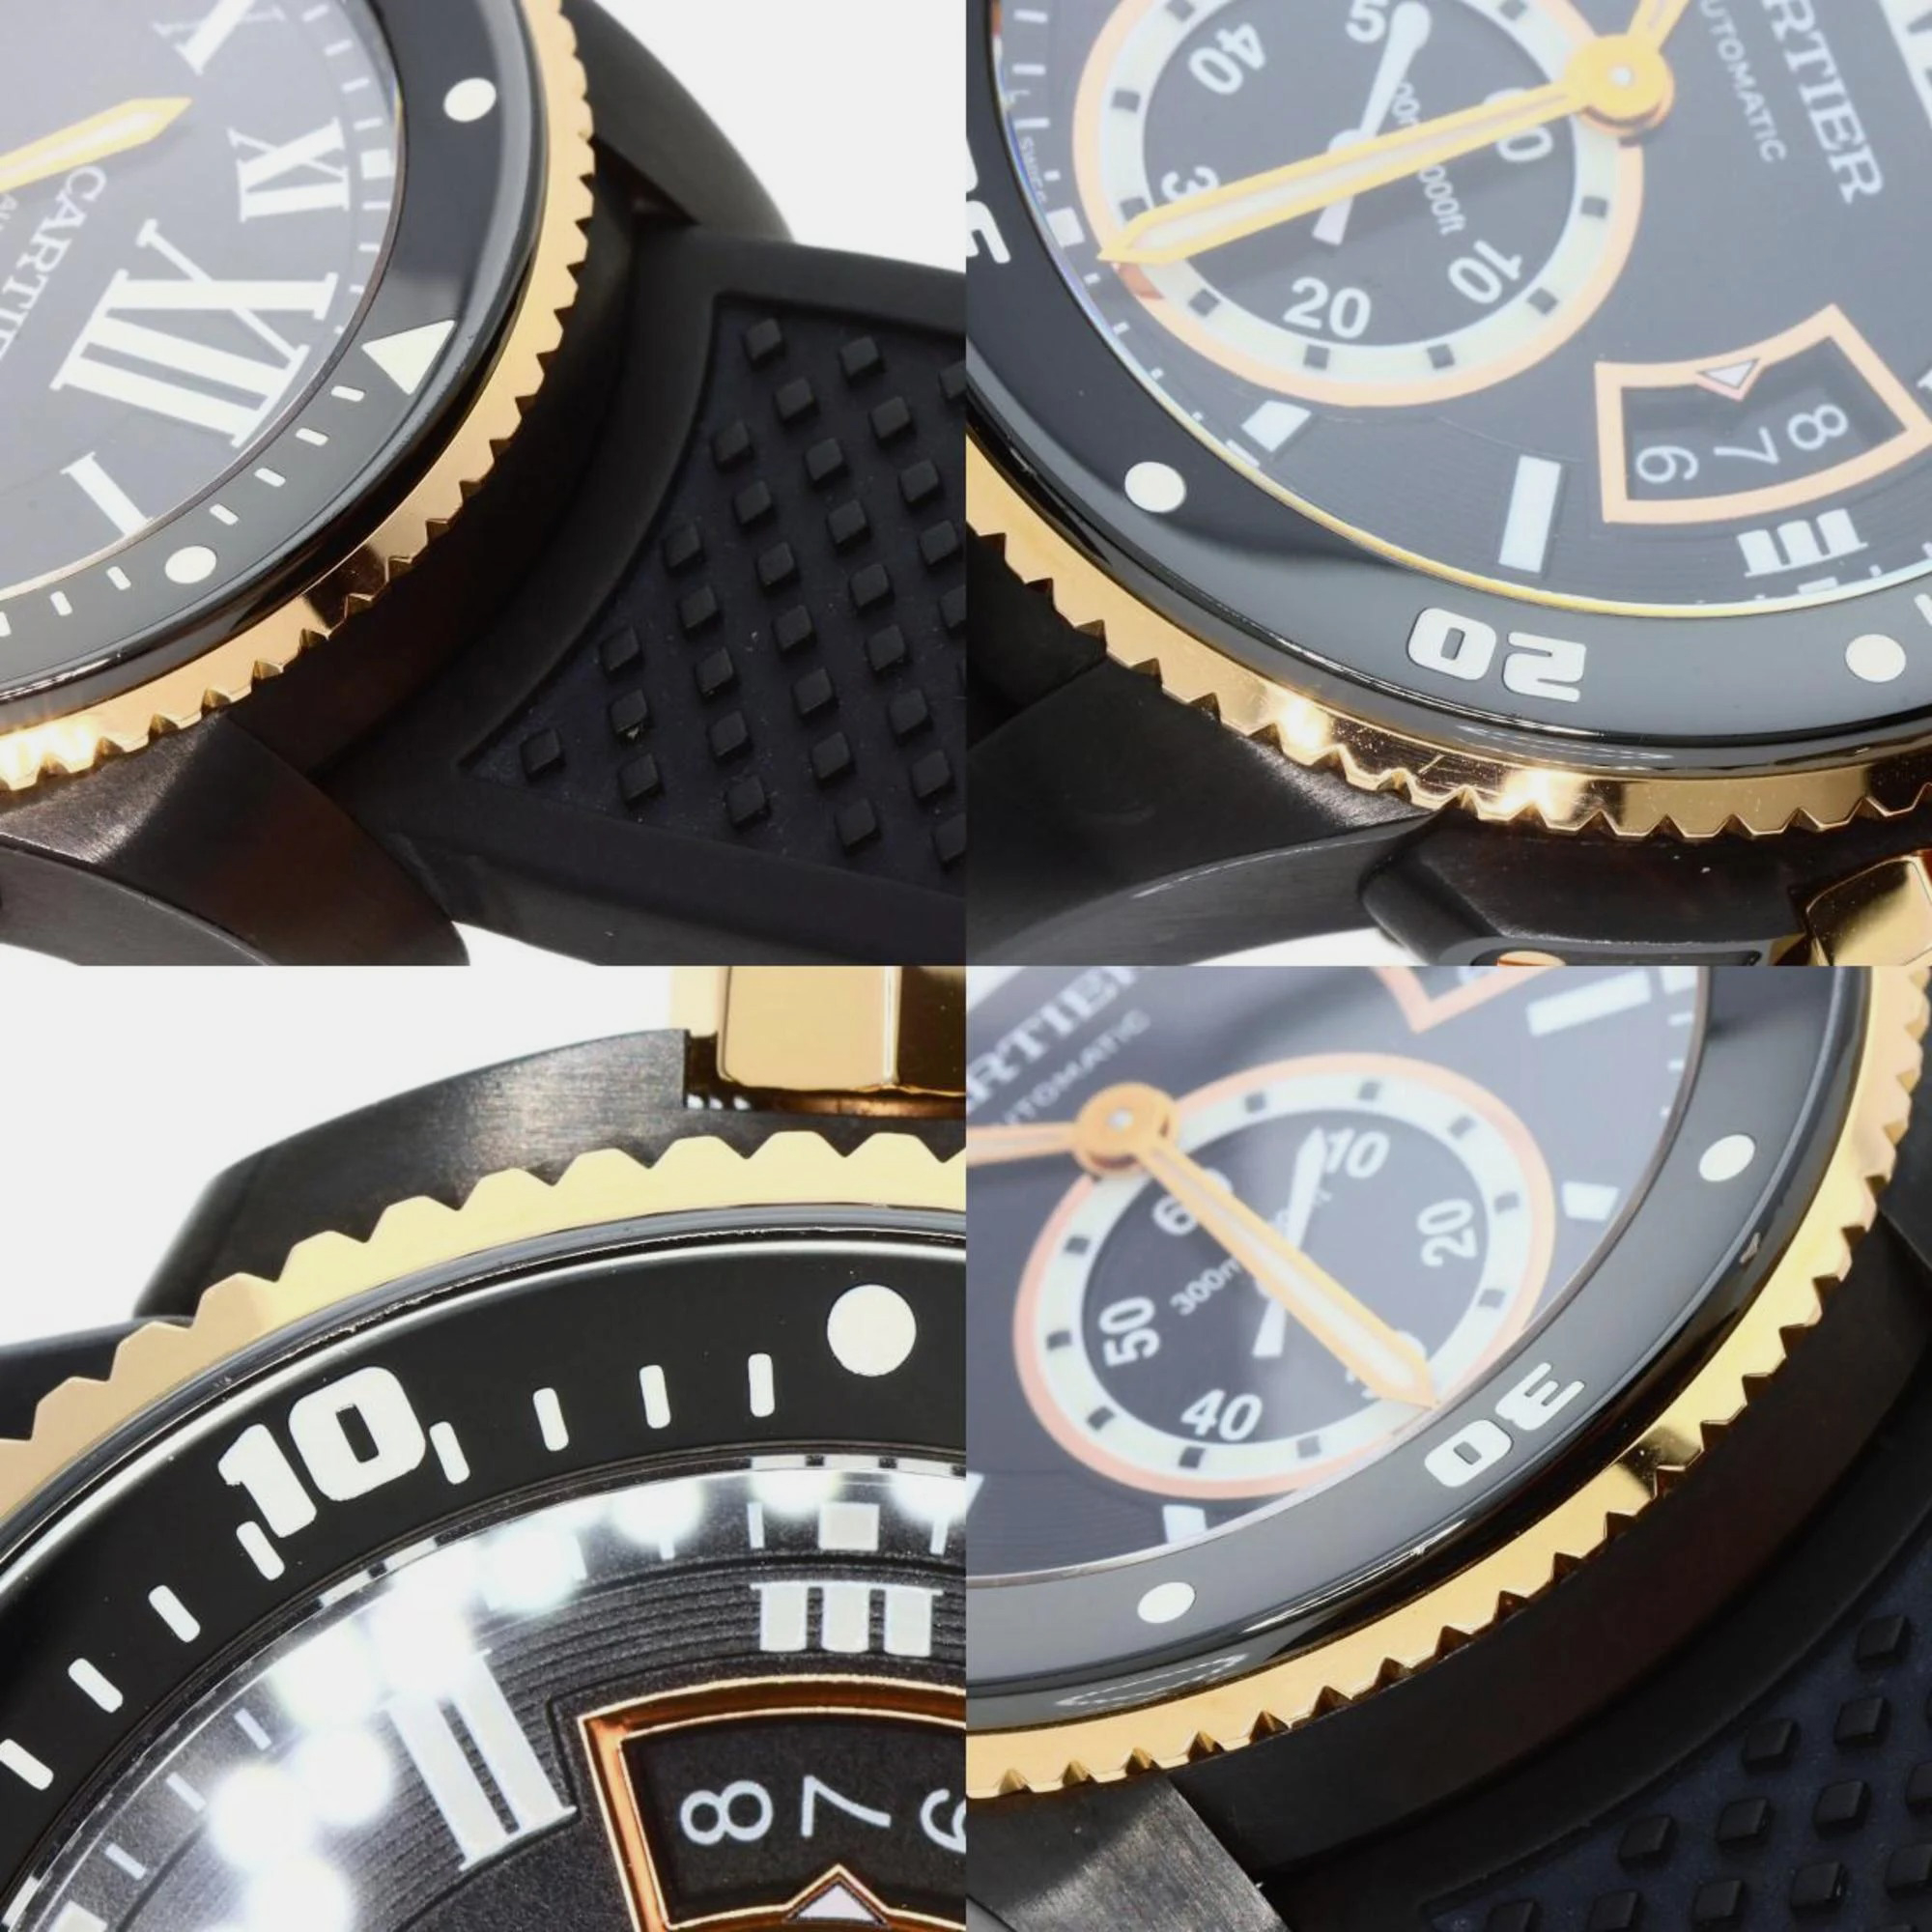 Cartier Black 18k Rose Gold And Stainless Steel Calibre De Cartier W2CA0004 Automatic Men's Wristwatch 42 Mm